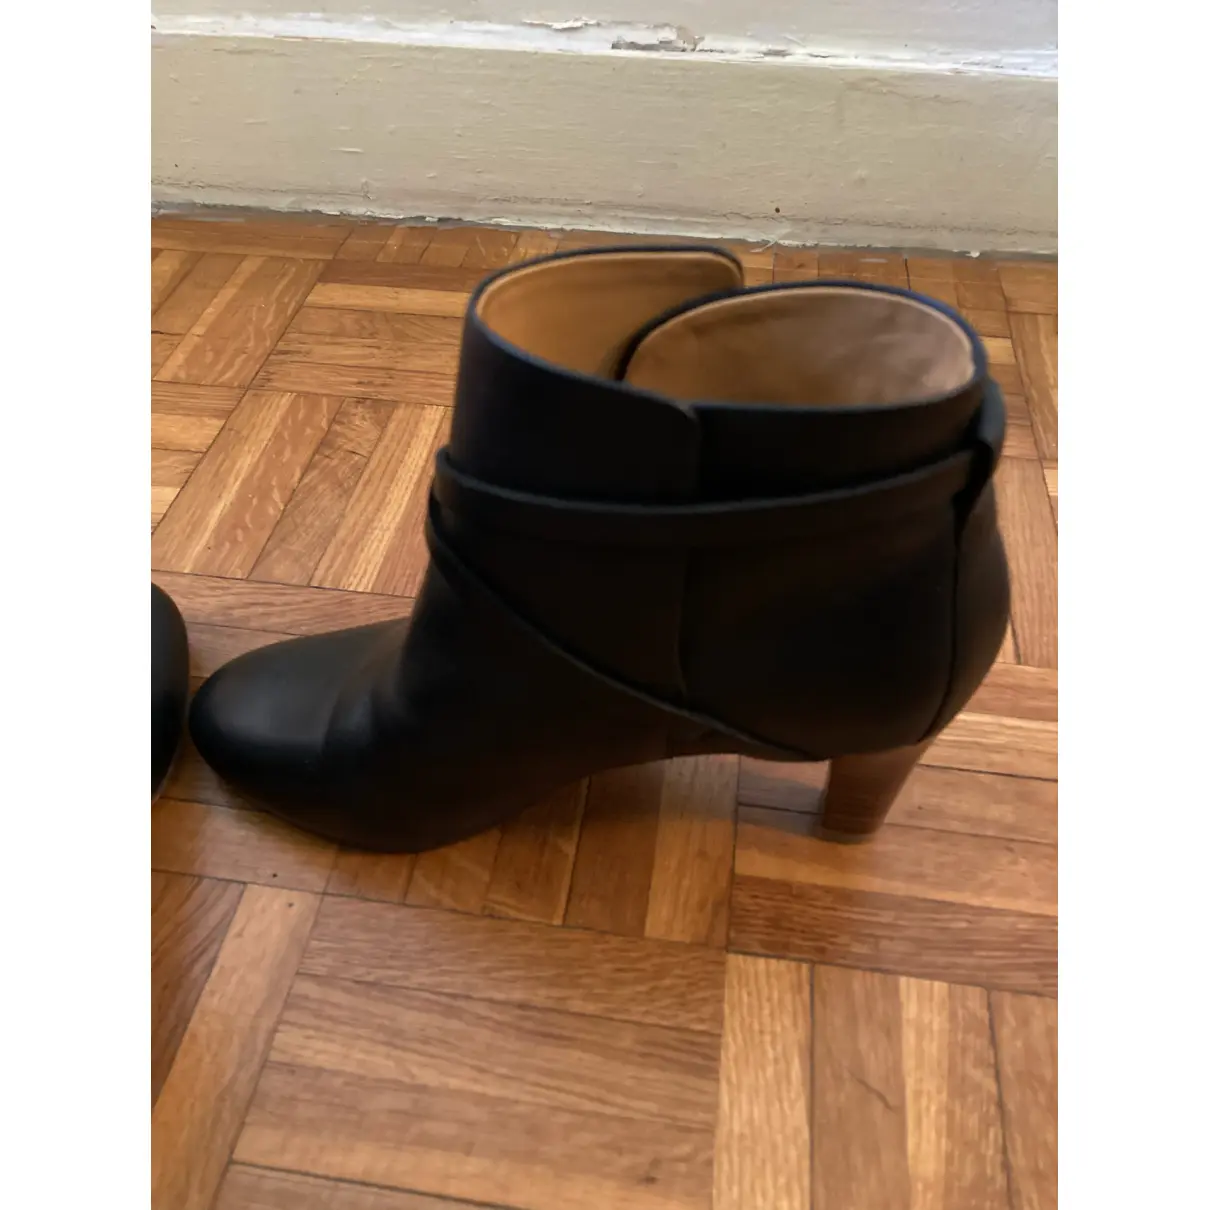 Leather ankle boots Sézane